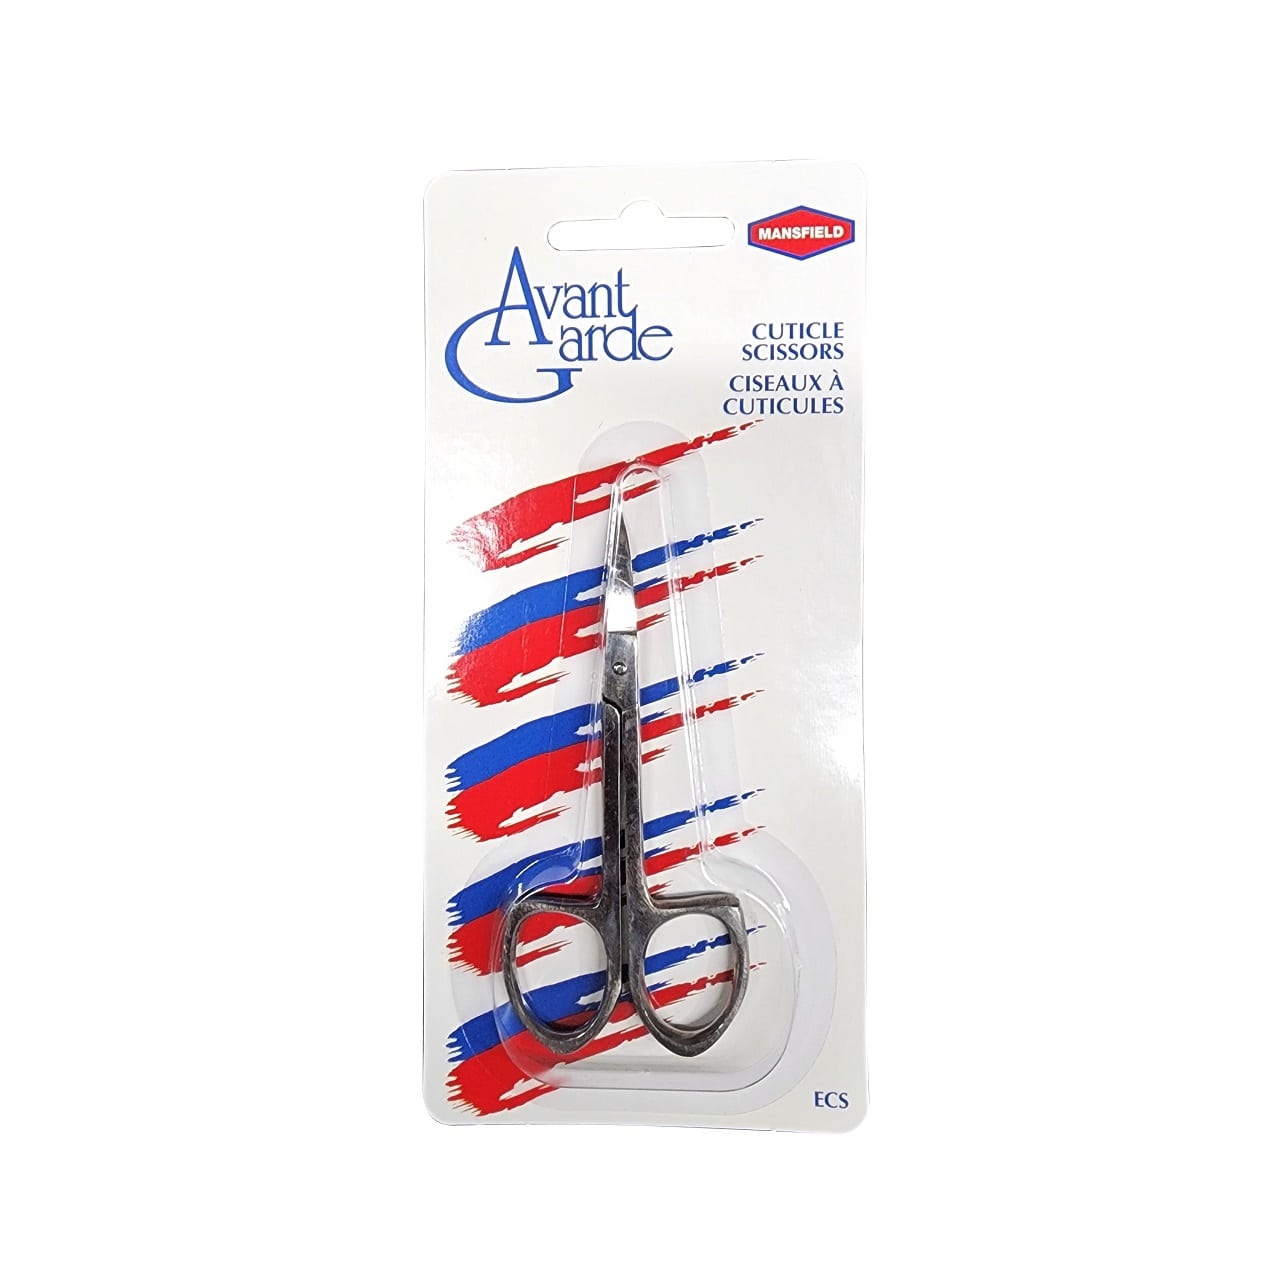 Product label for Mansfield Avant Garde Cuticle Scissors